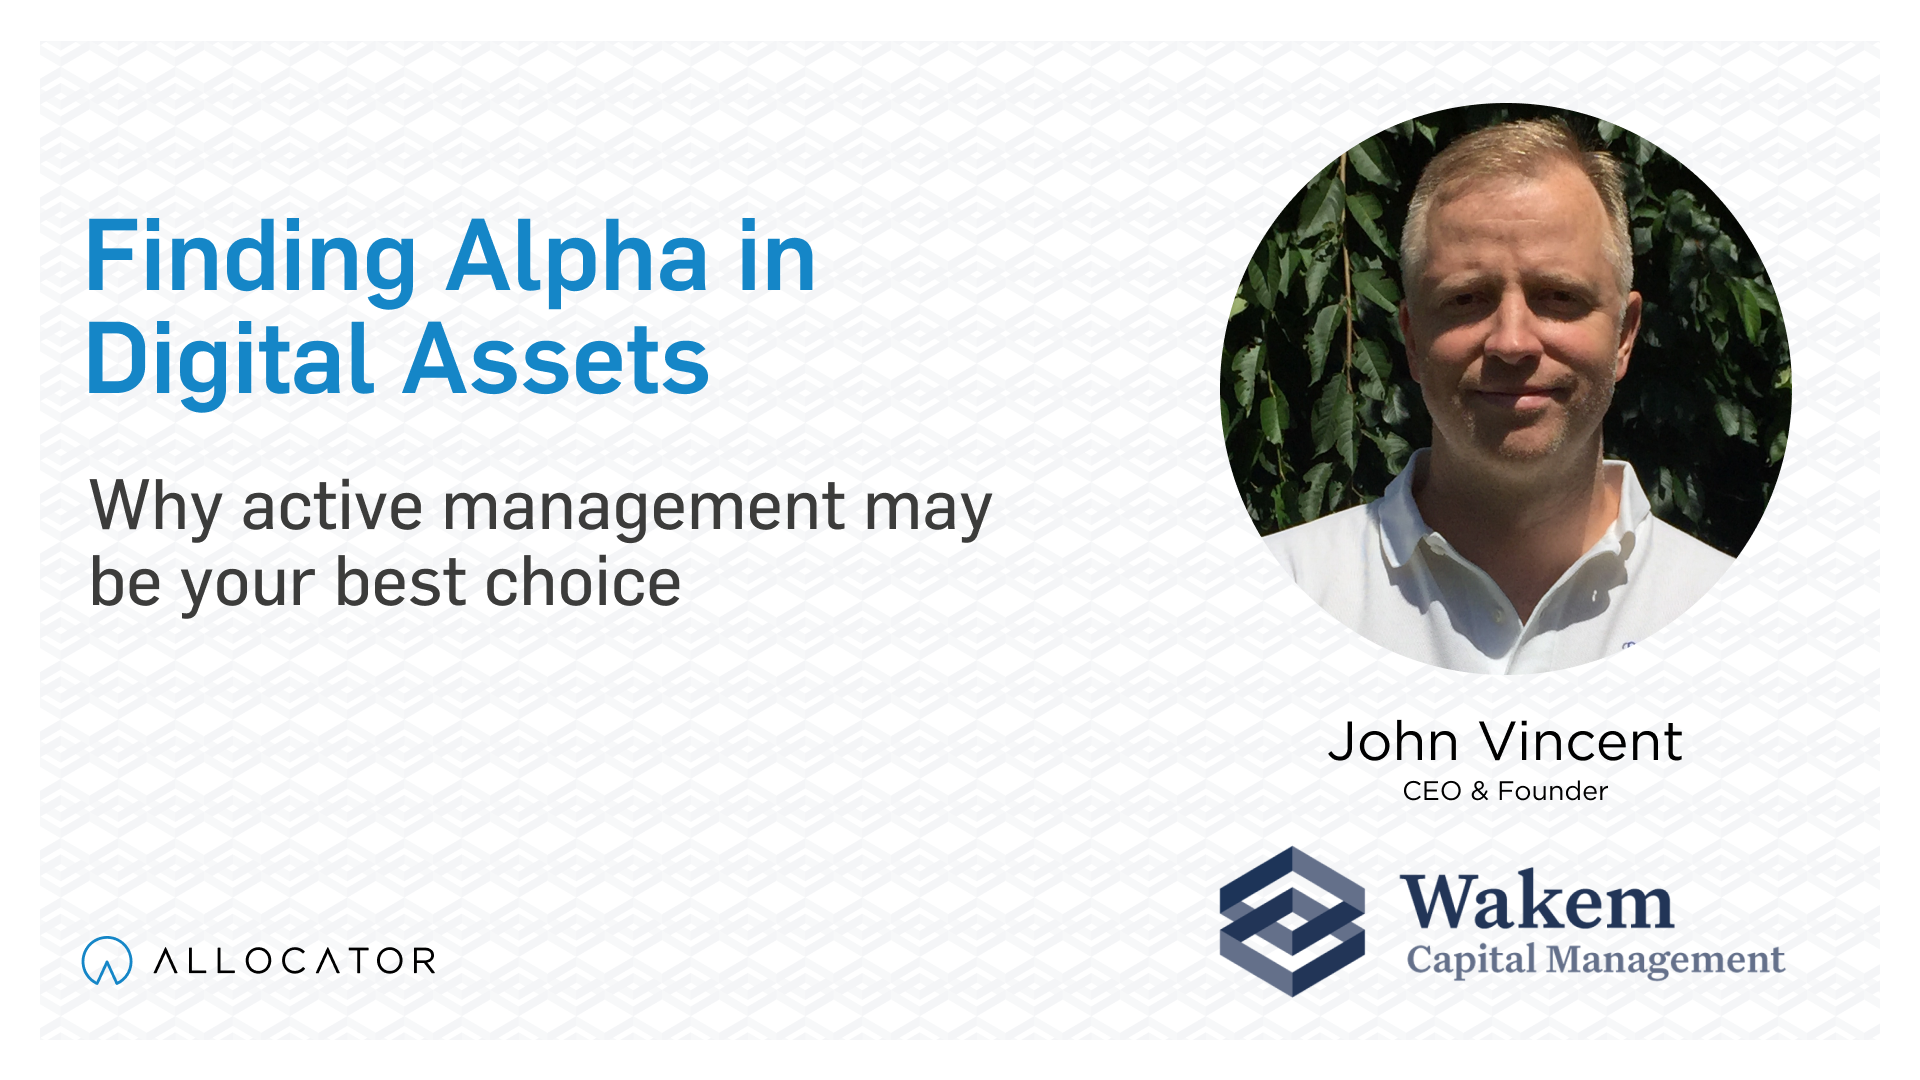 Wakem - Finding Alpha in Digital Assets